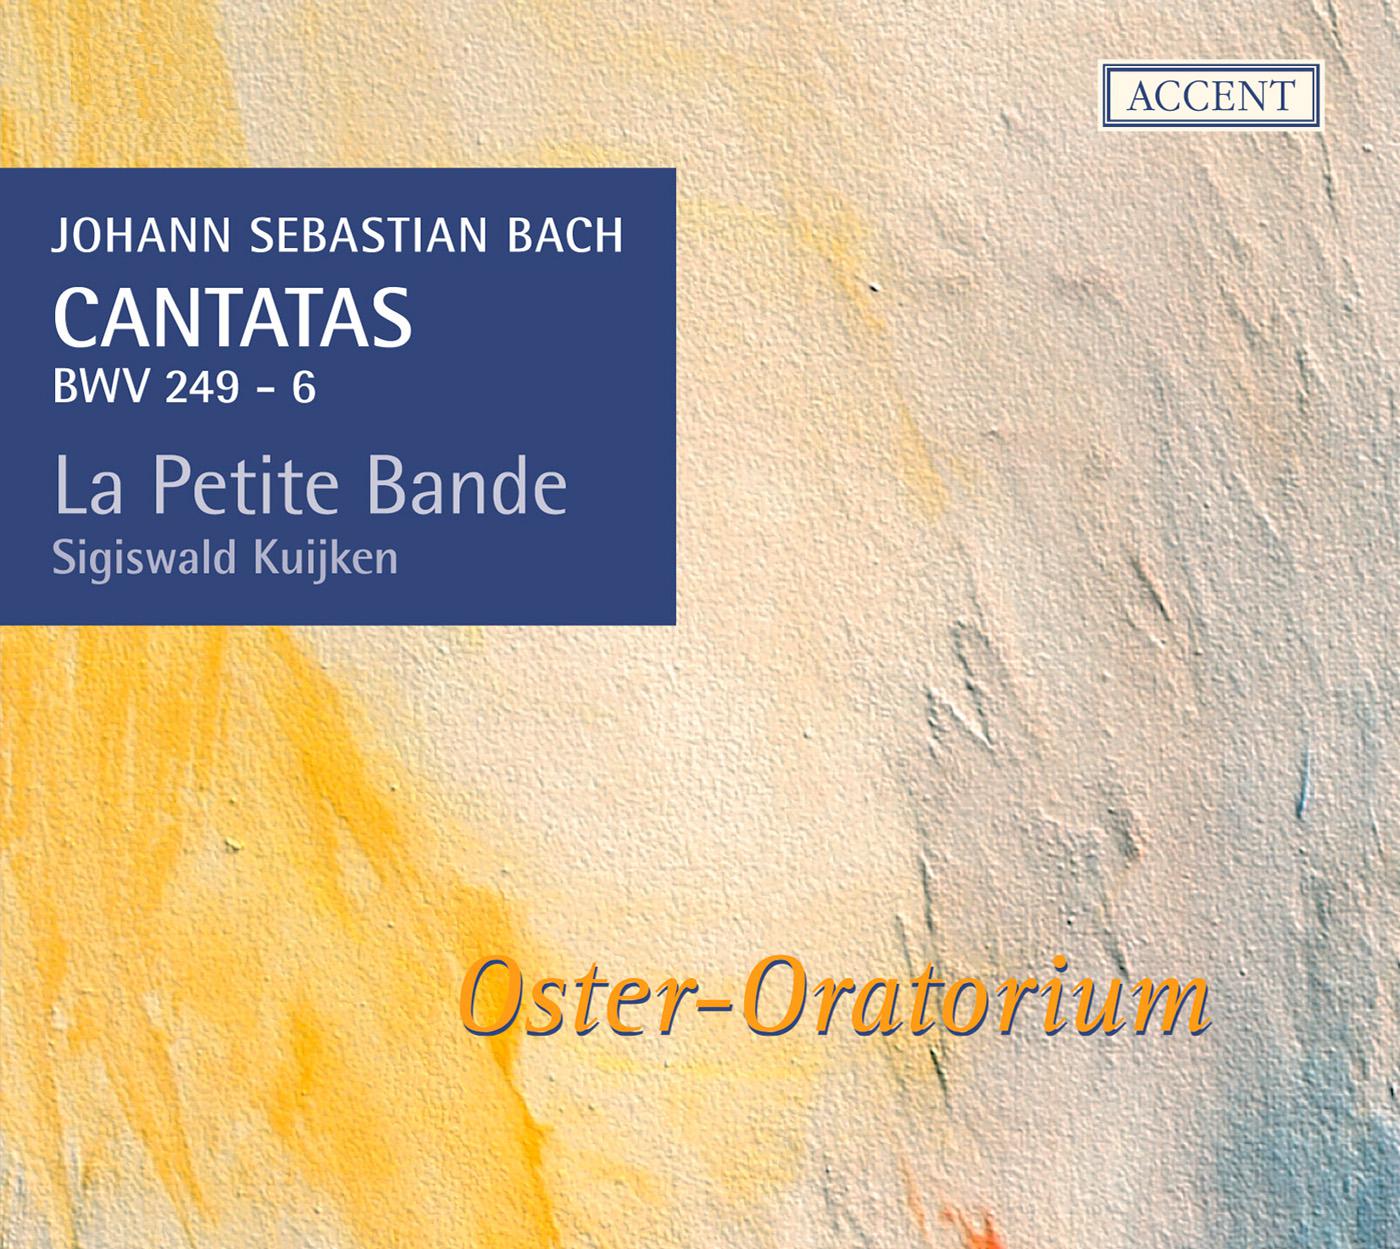 Oster-Oratorium, BWV 249: Sinfonia